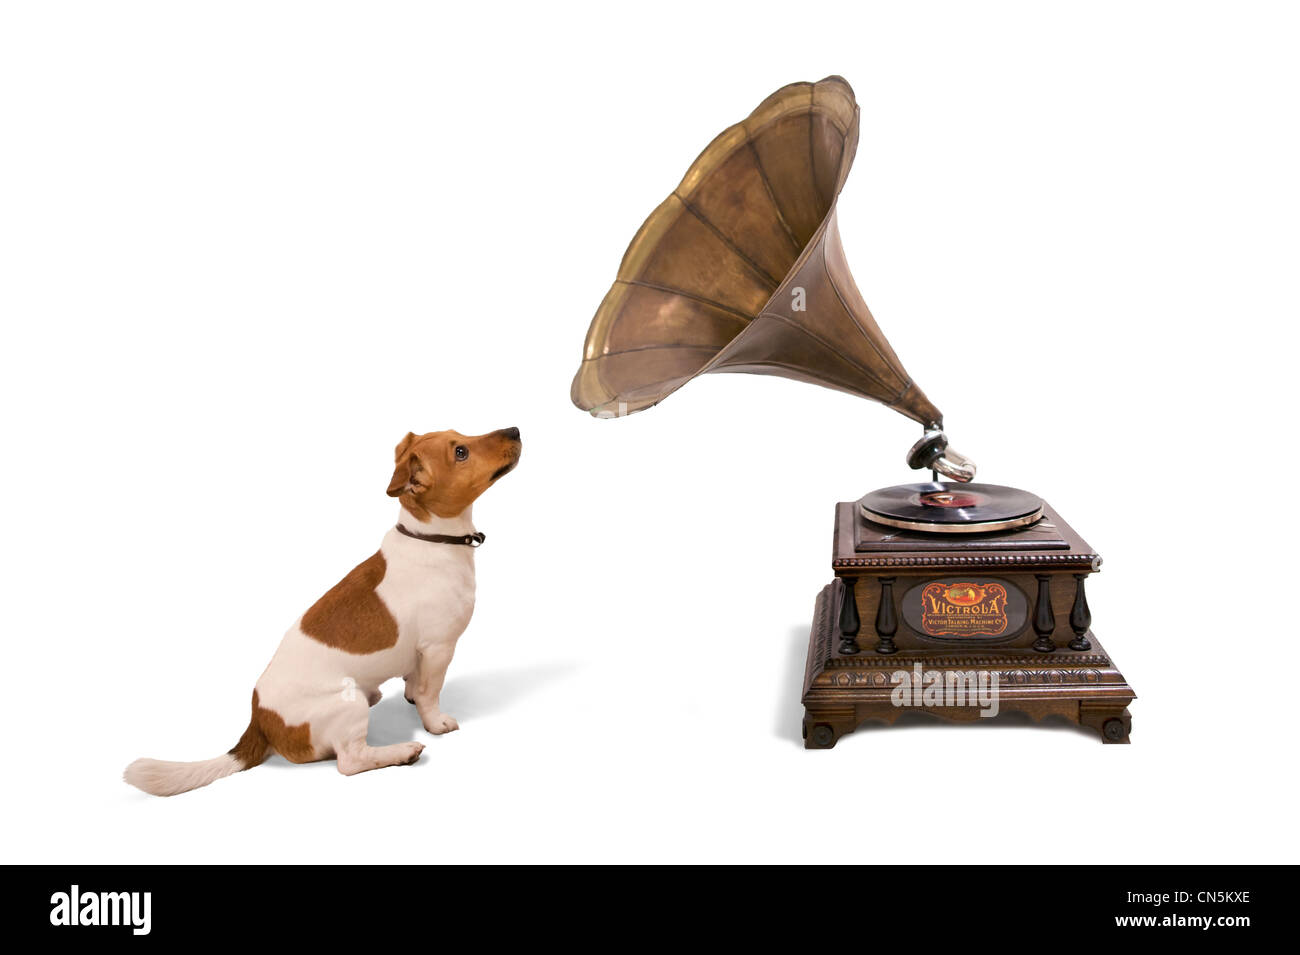 Vintage Grammophon mit Hund, Victor Stockfotografie - Alamy